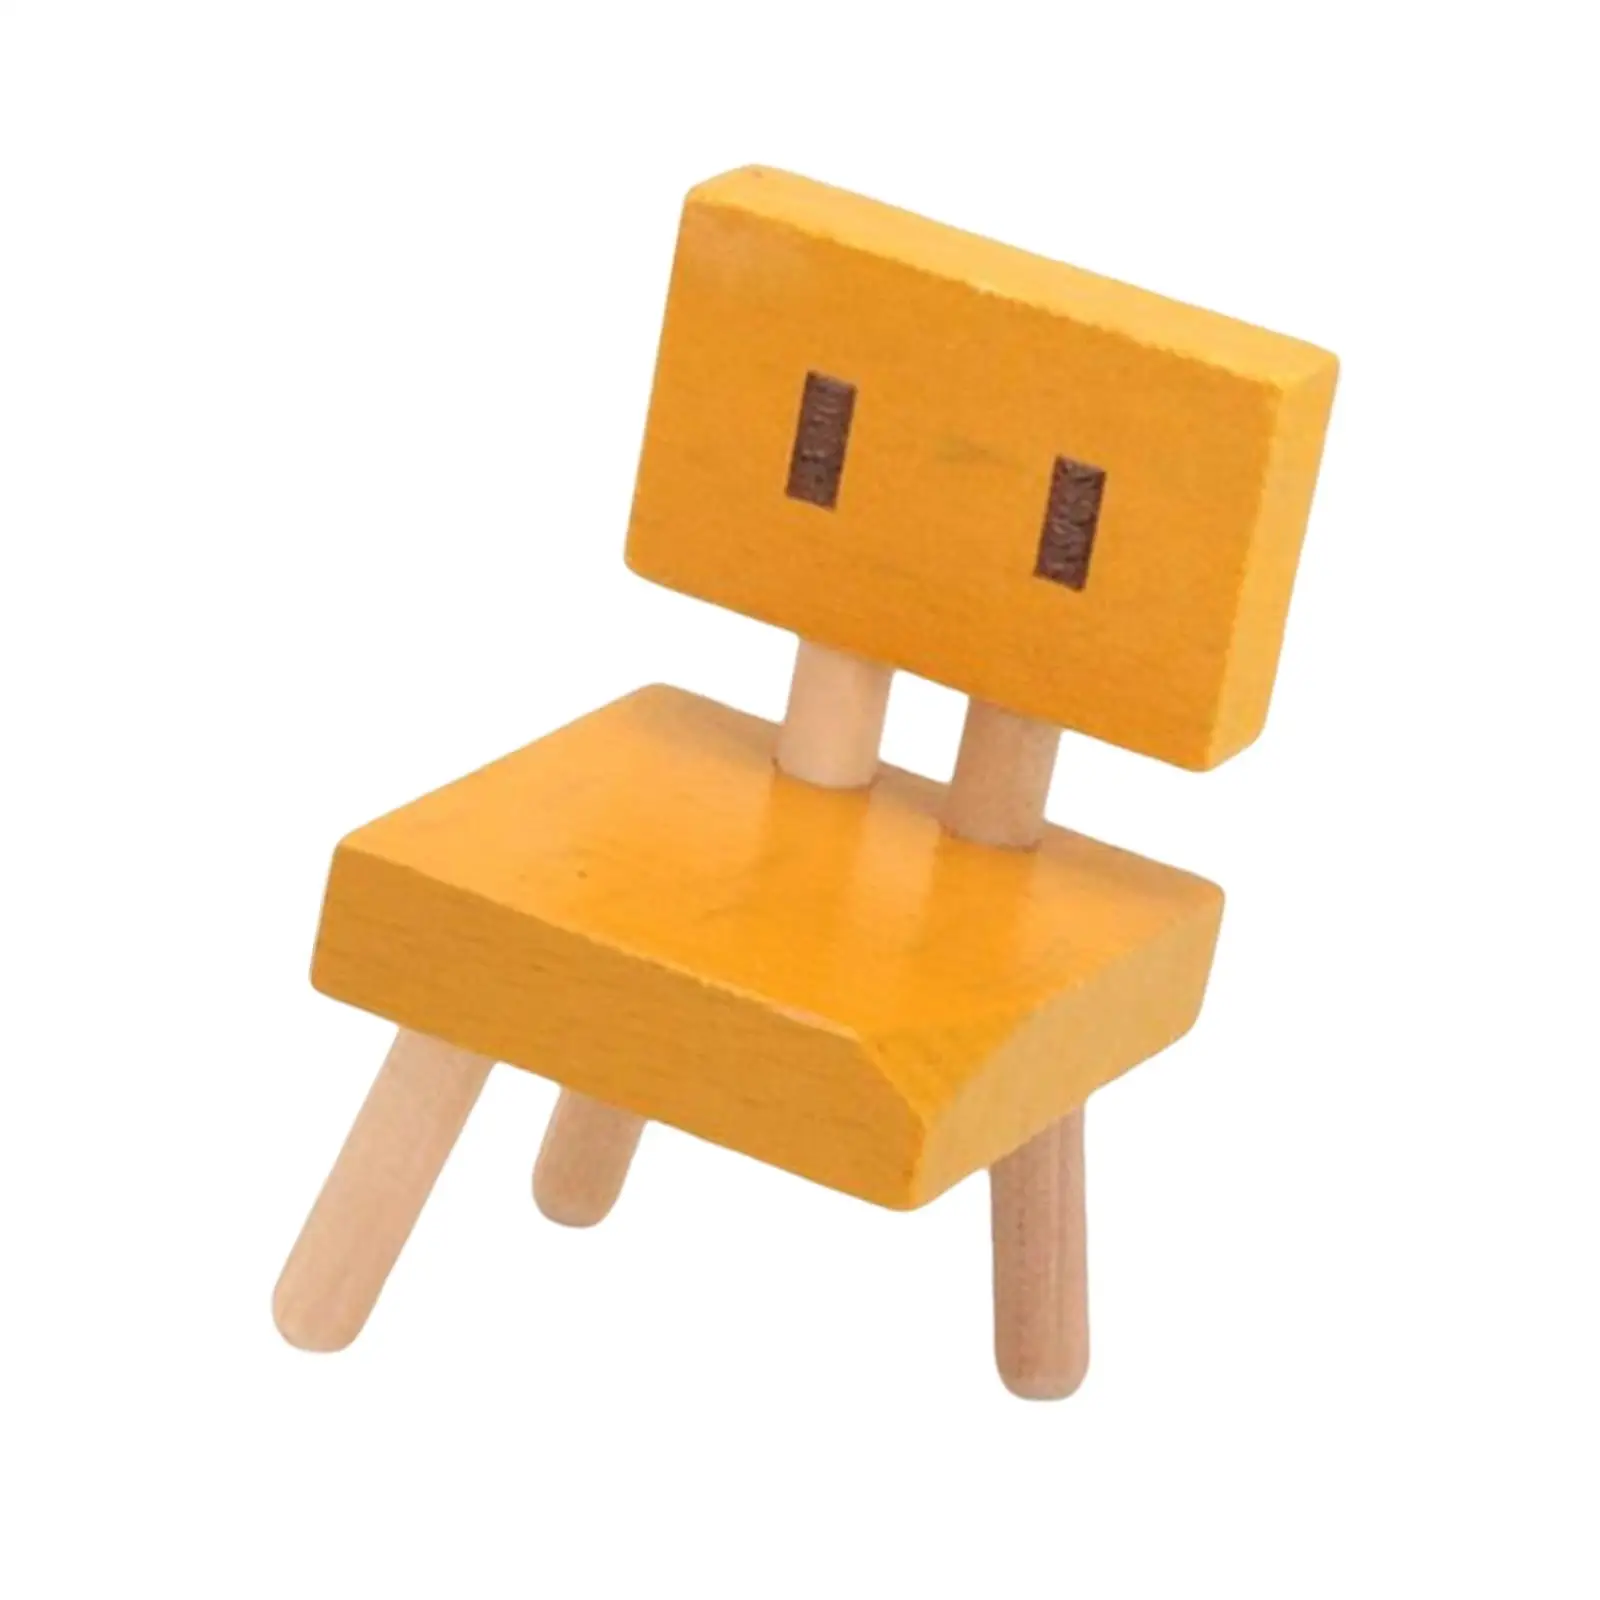 Mini Small Chair Ornament Anime Peripherals Centerpiece Figurines Dollhouse Accessories Desktop Mini Chair for Office Decoration